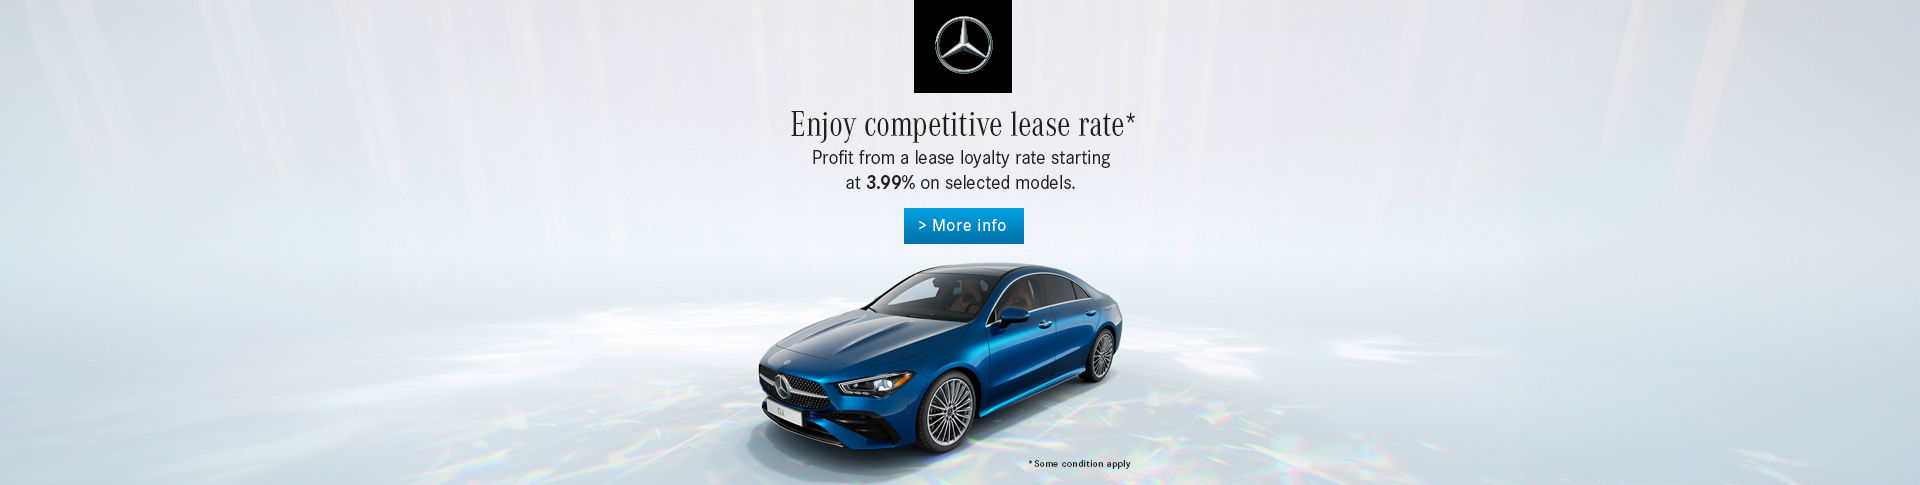 Enjoy lease rates